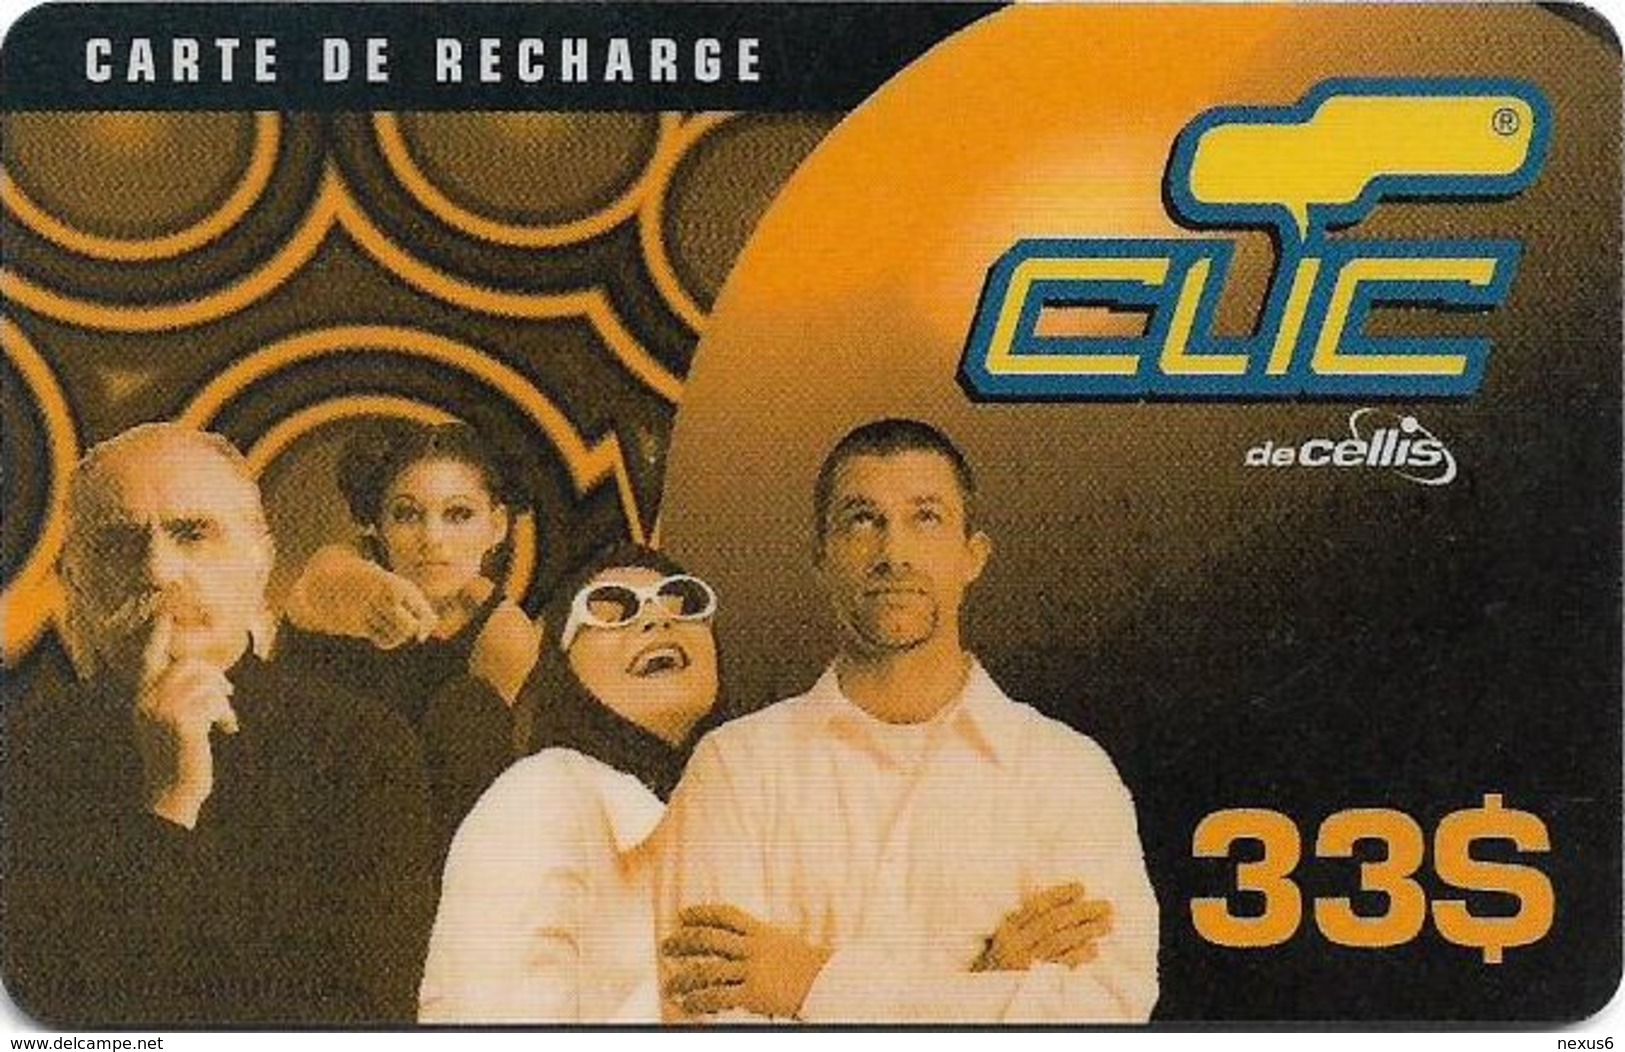 Lebanon - Clic De Cellis - Family, Exp. 31.06.2001, Prepaid 33$, Used - Lebanon